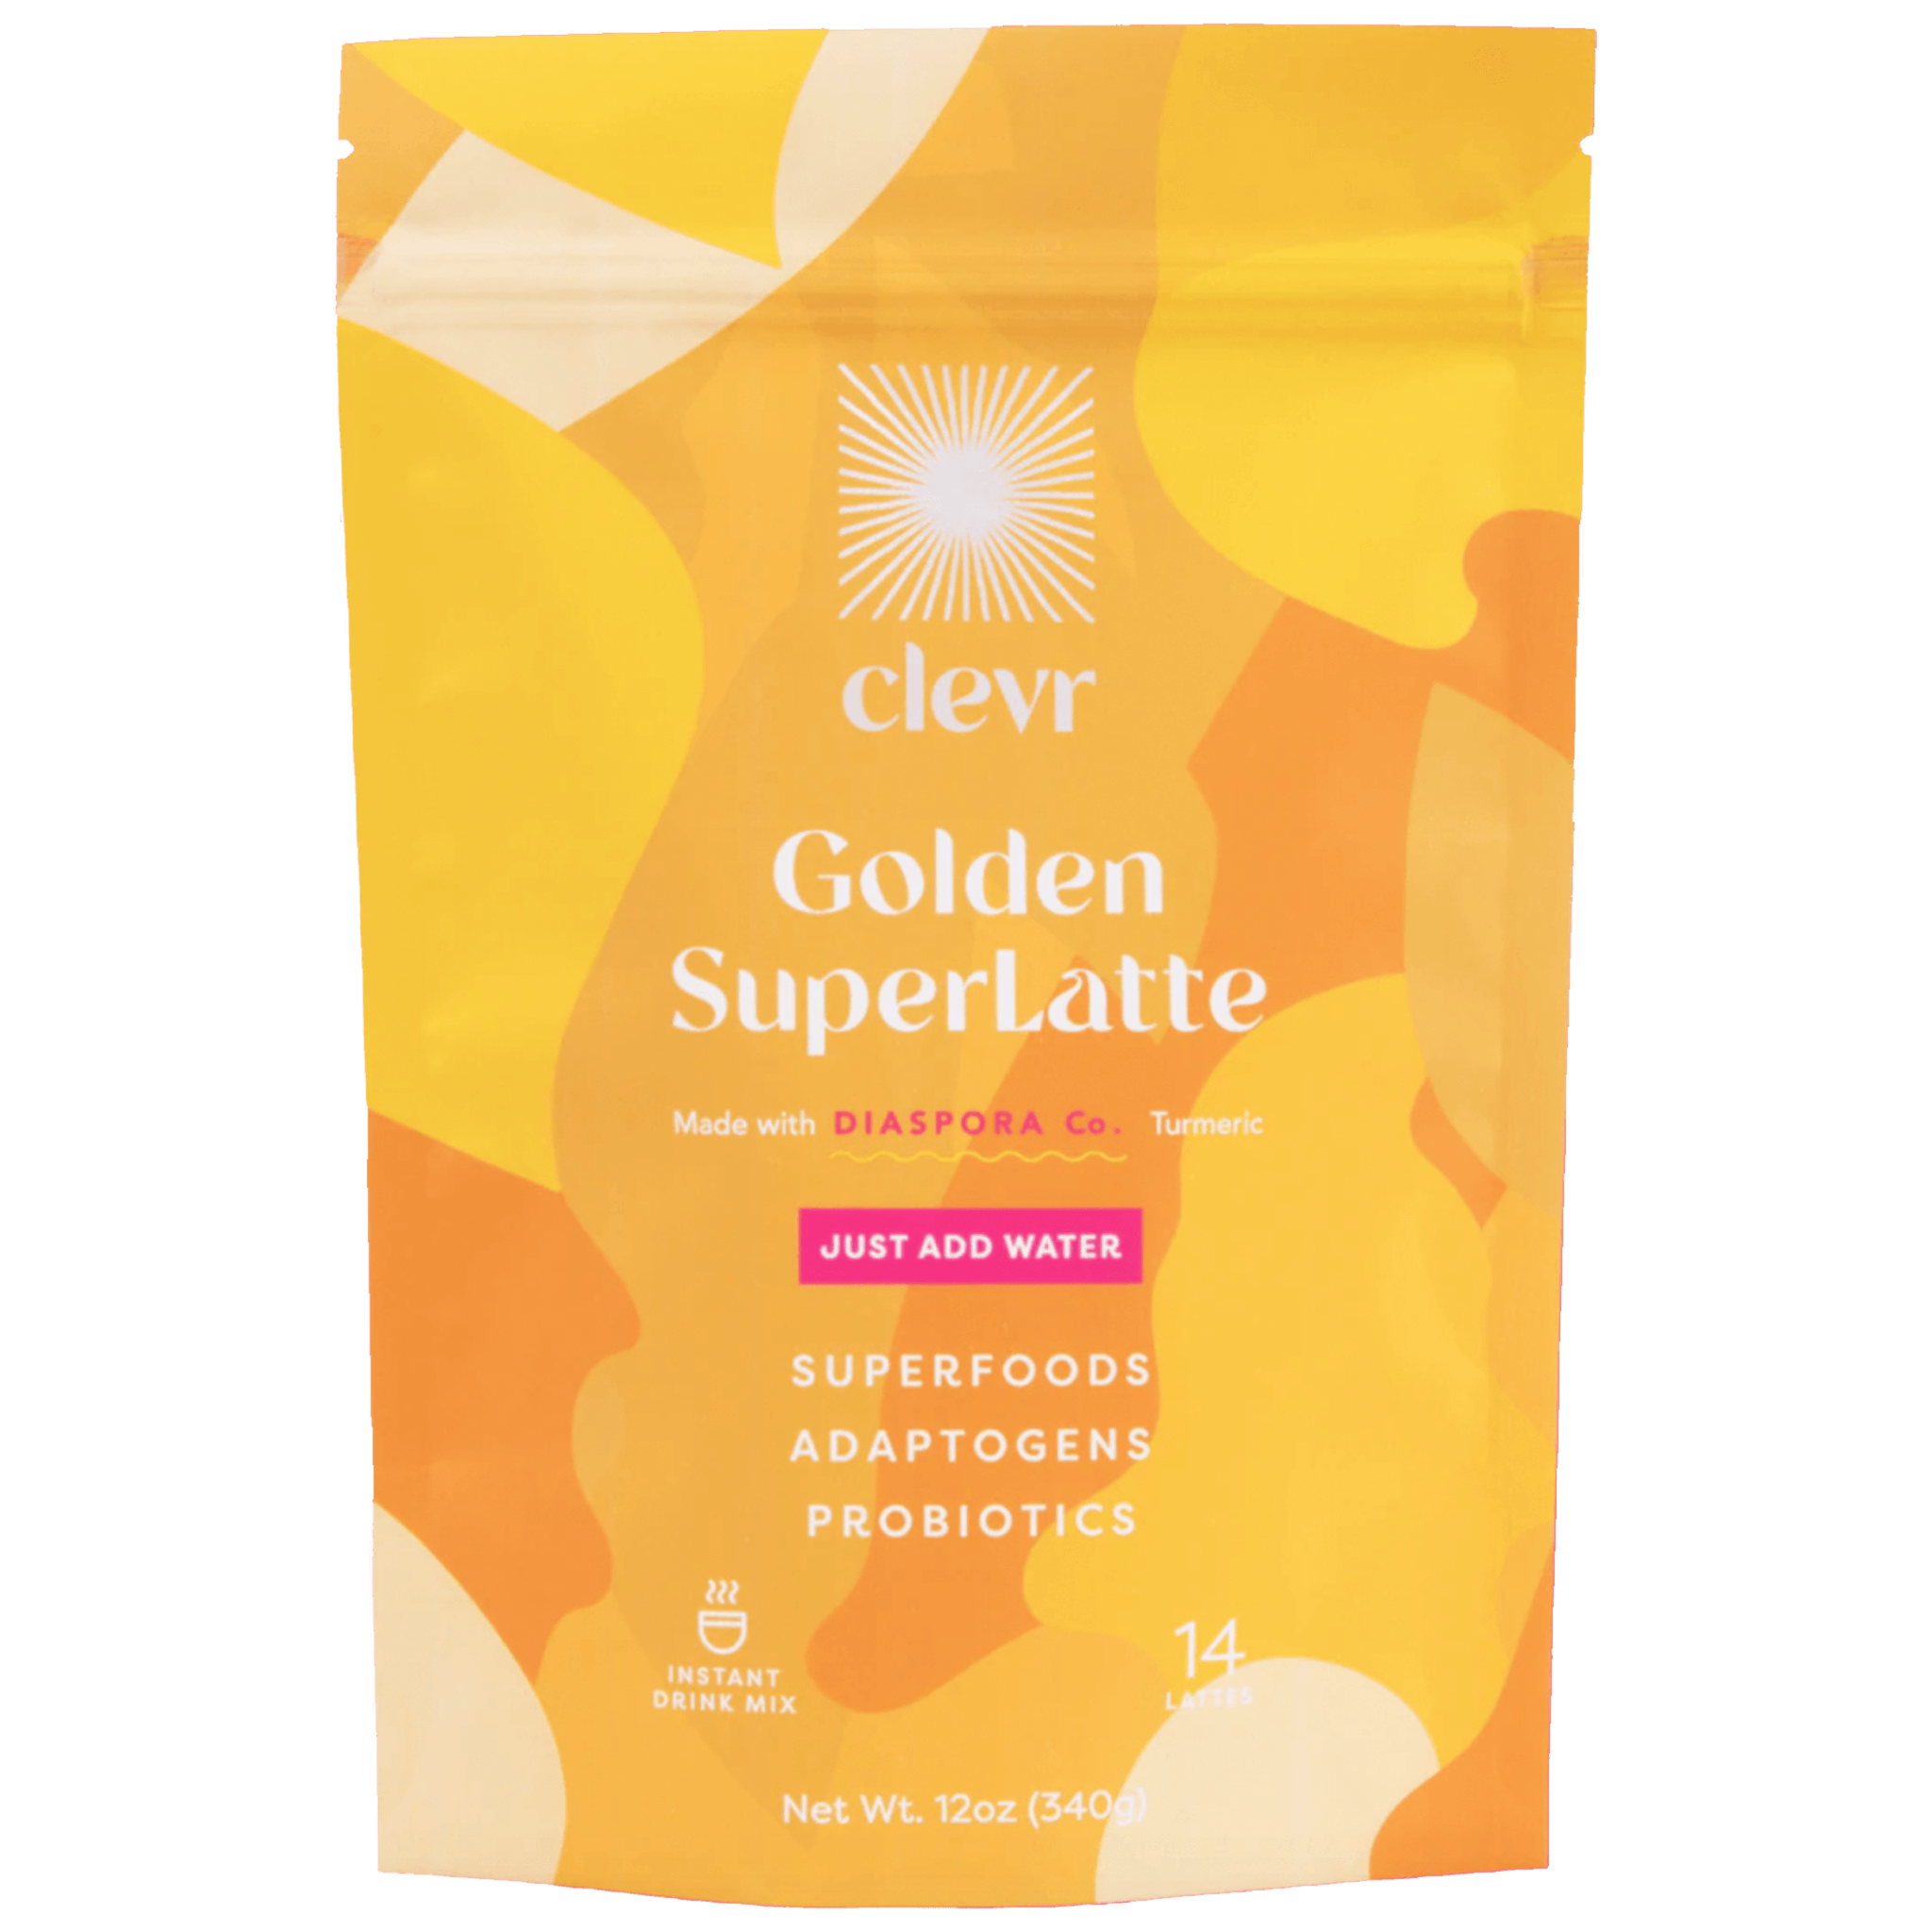 Golden SuperLatte - Clevr Blends - Consumerhaus